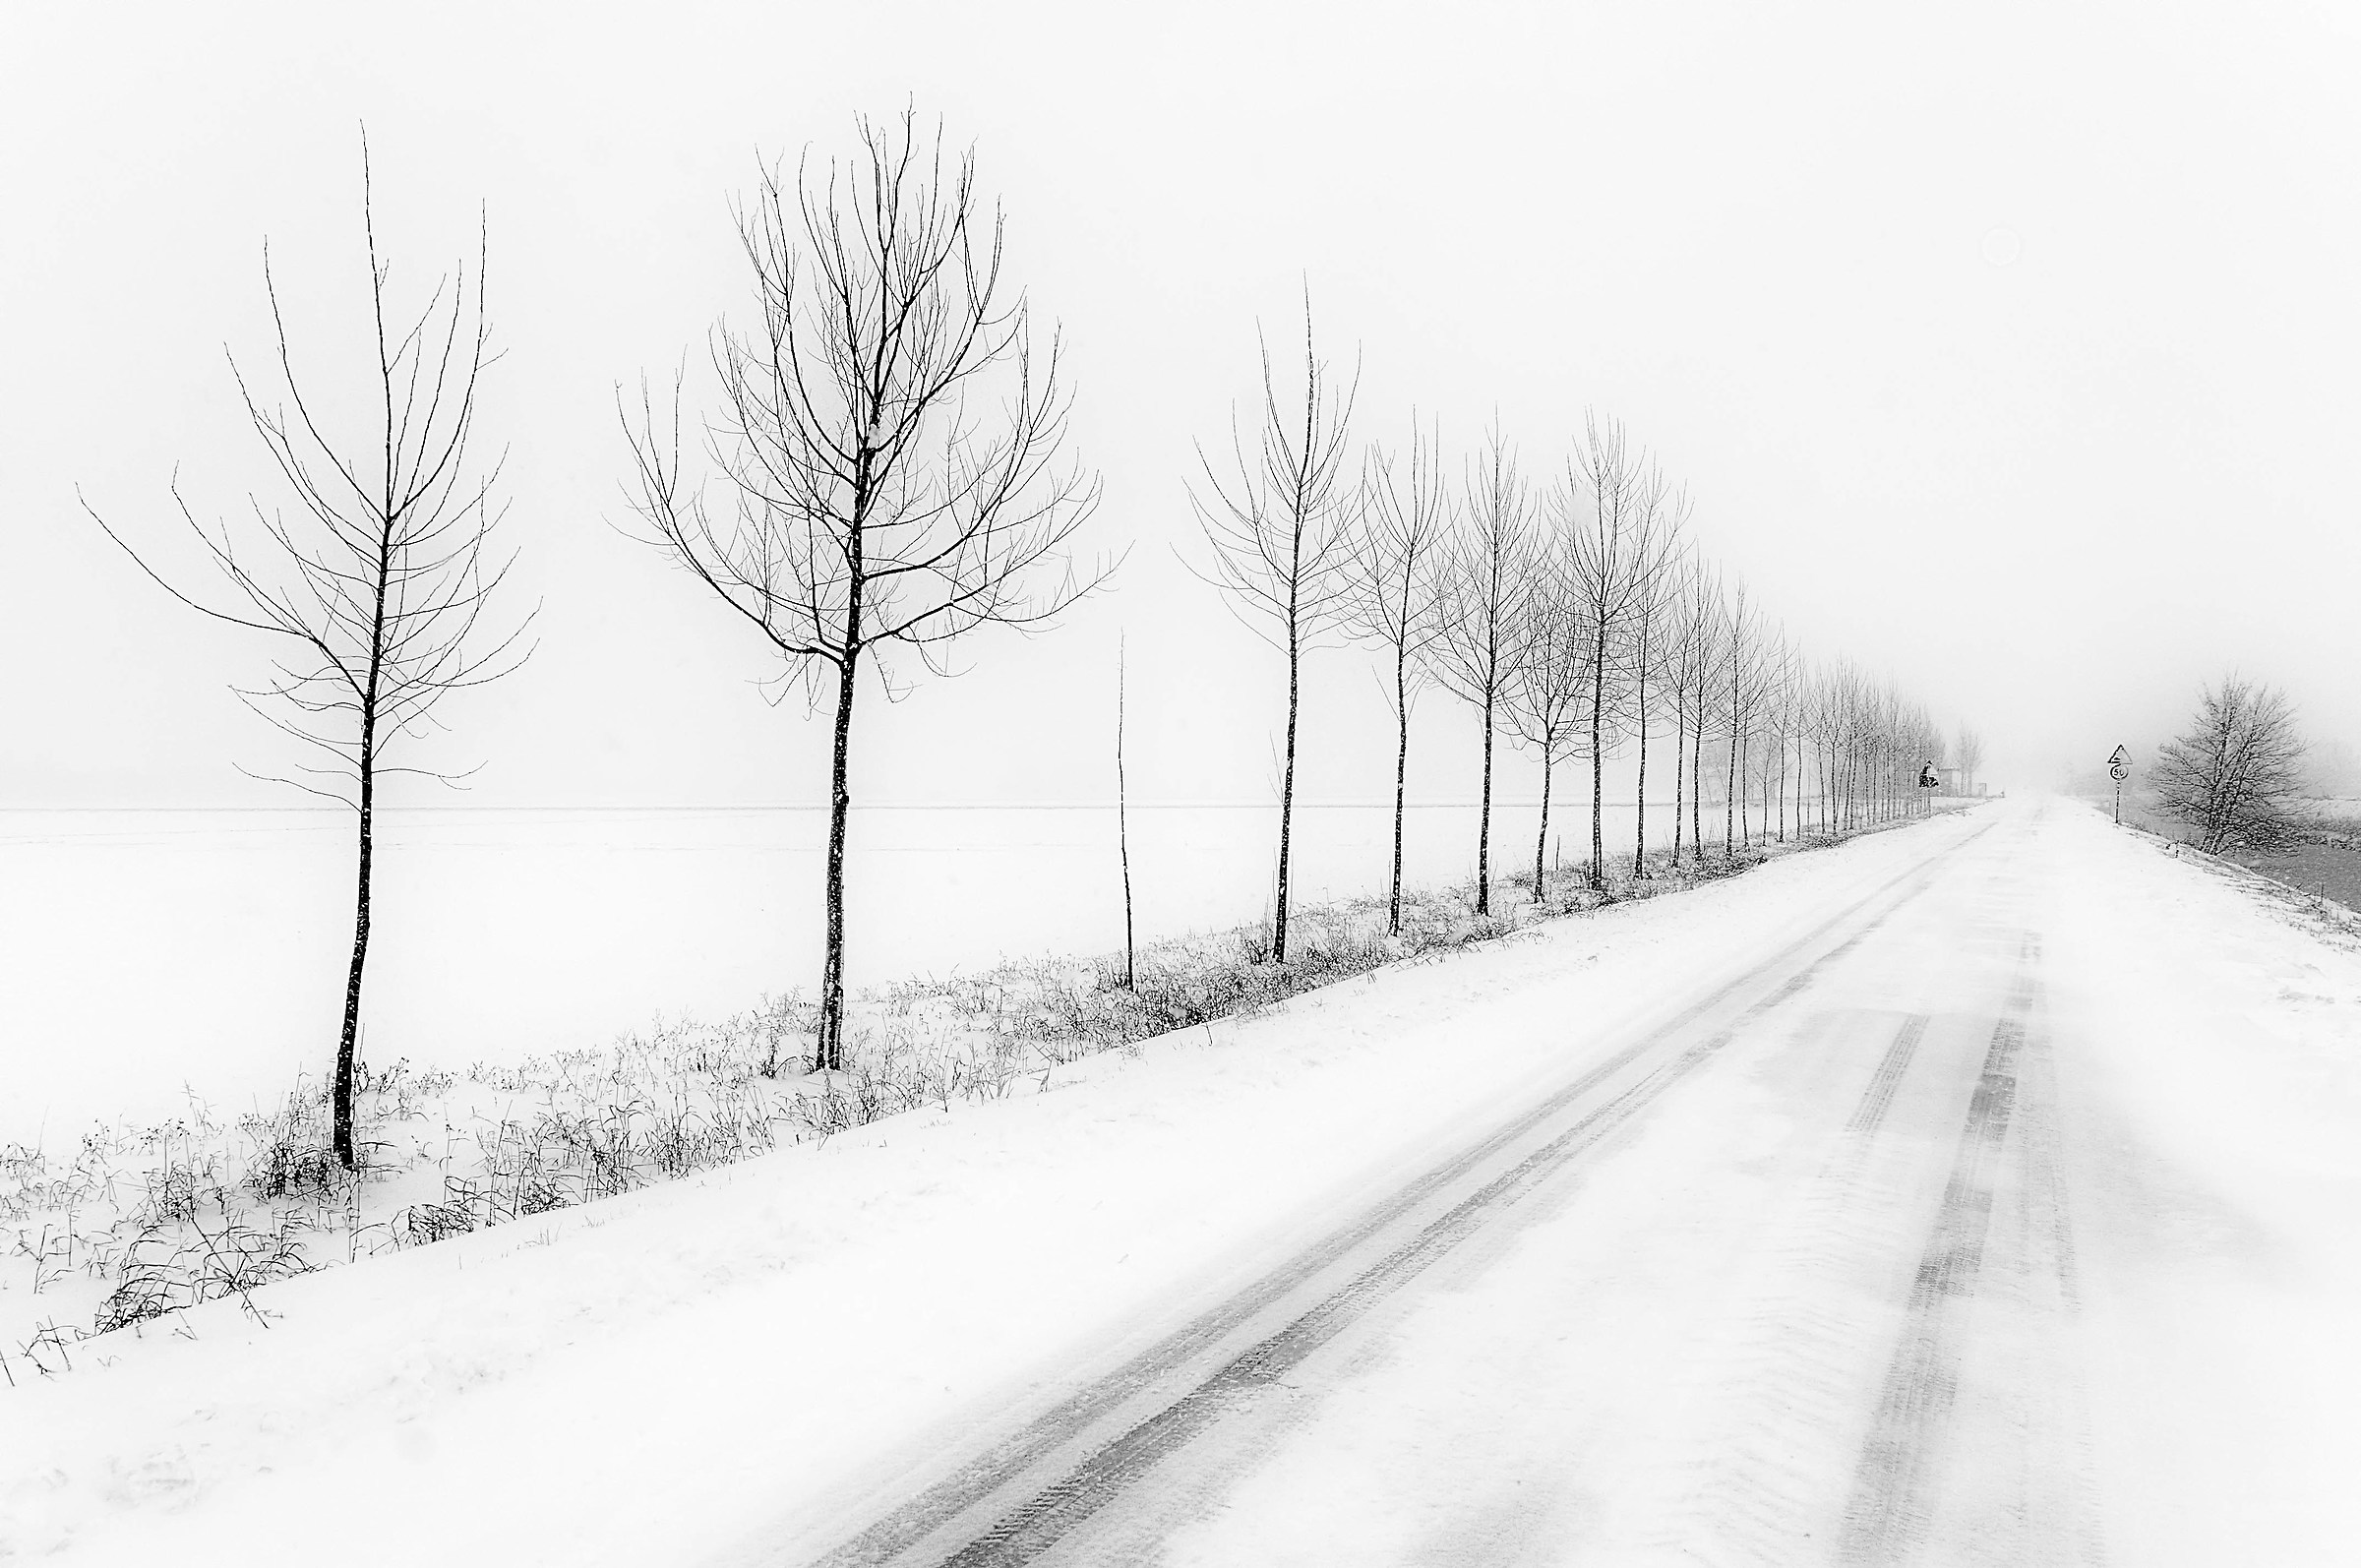 The quiet road of snow...